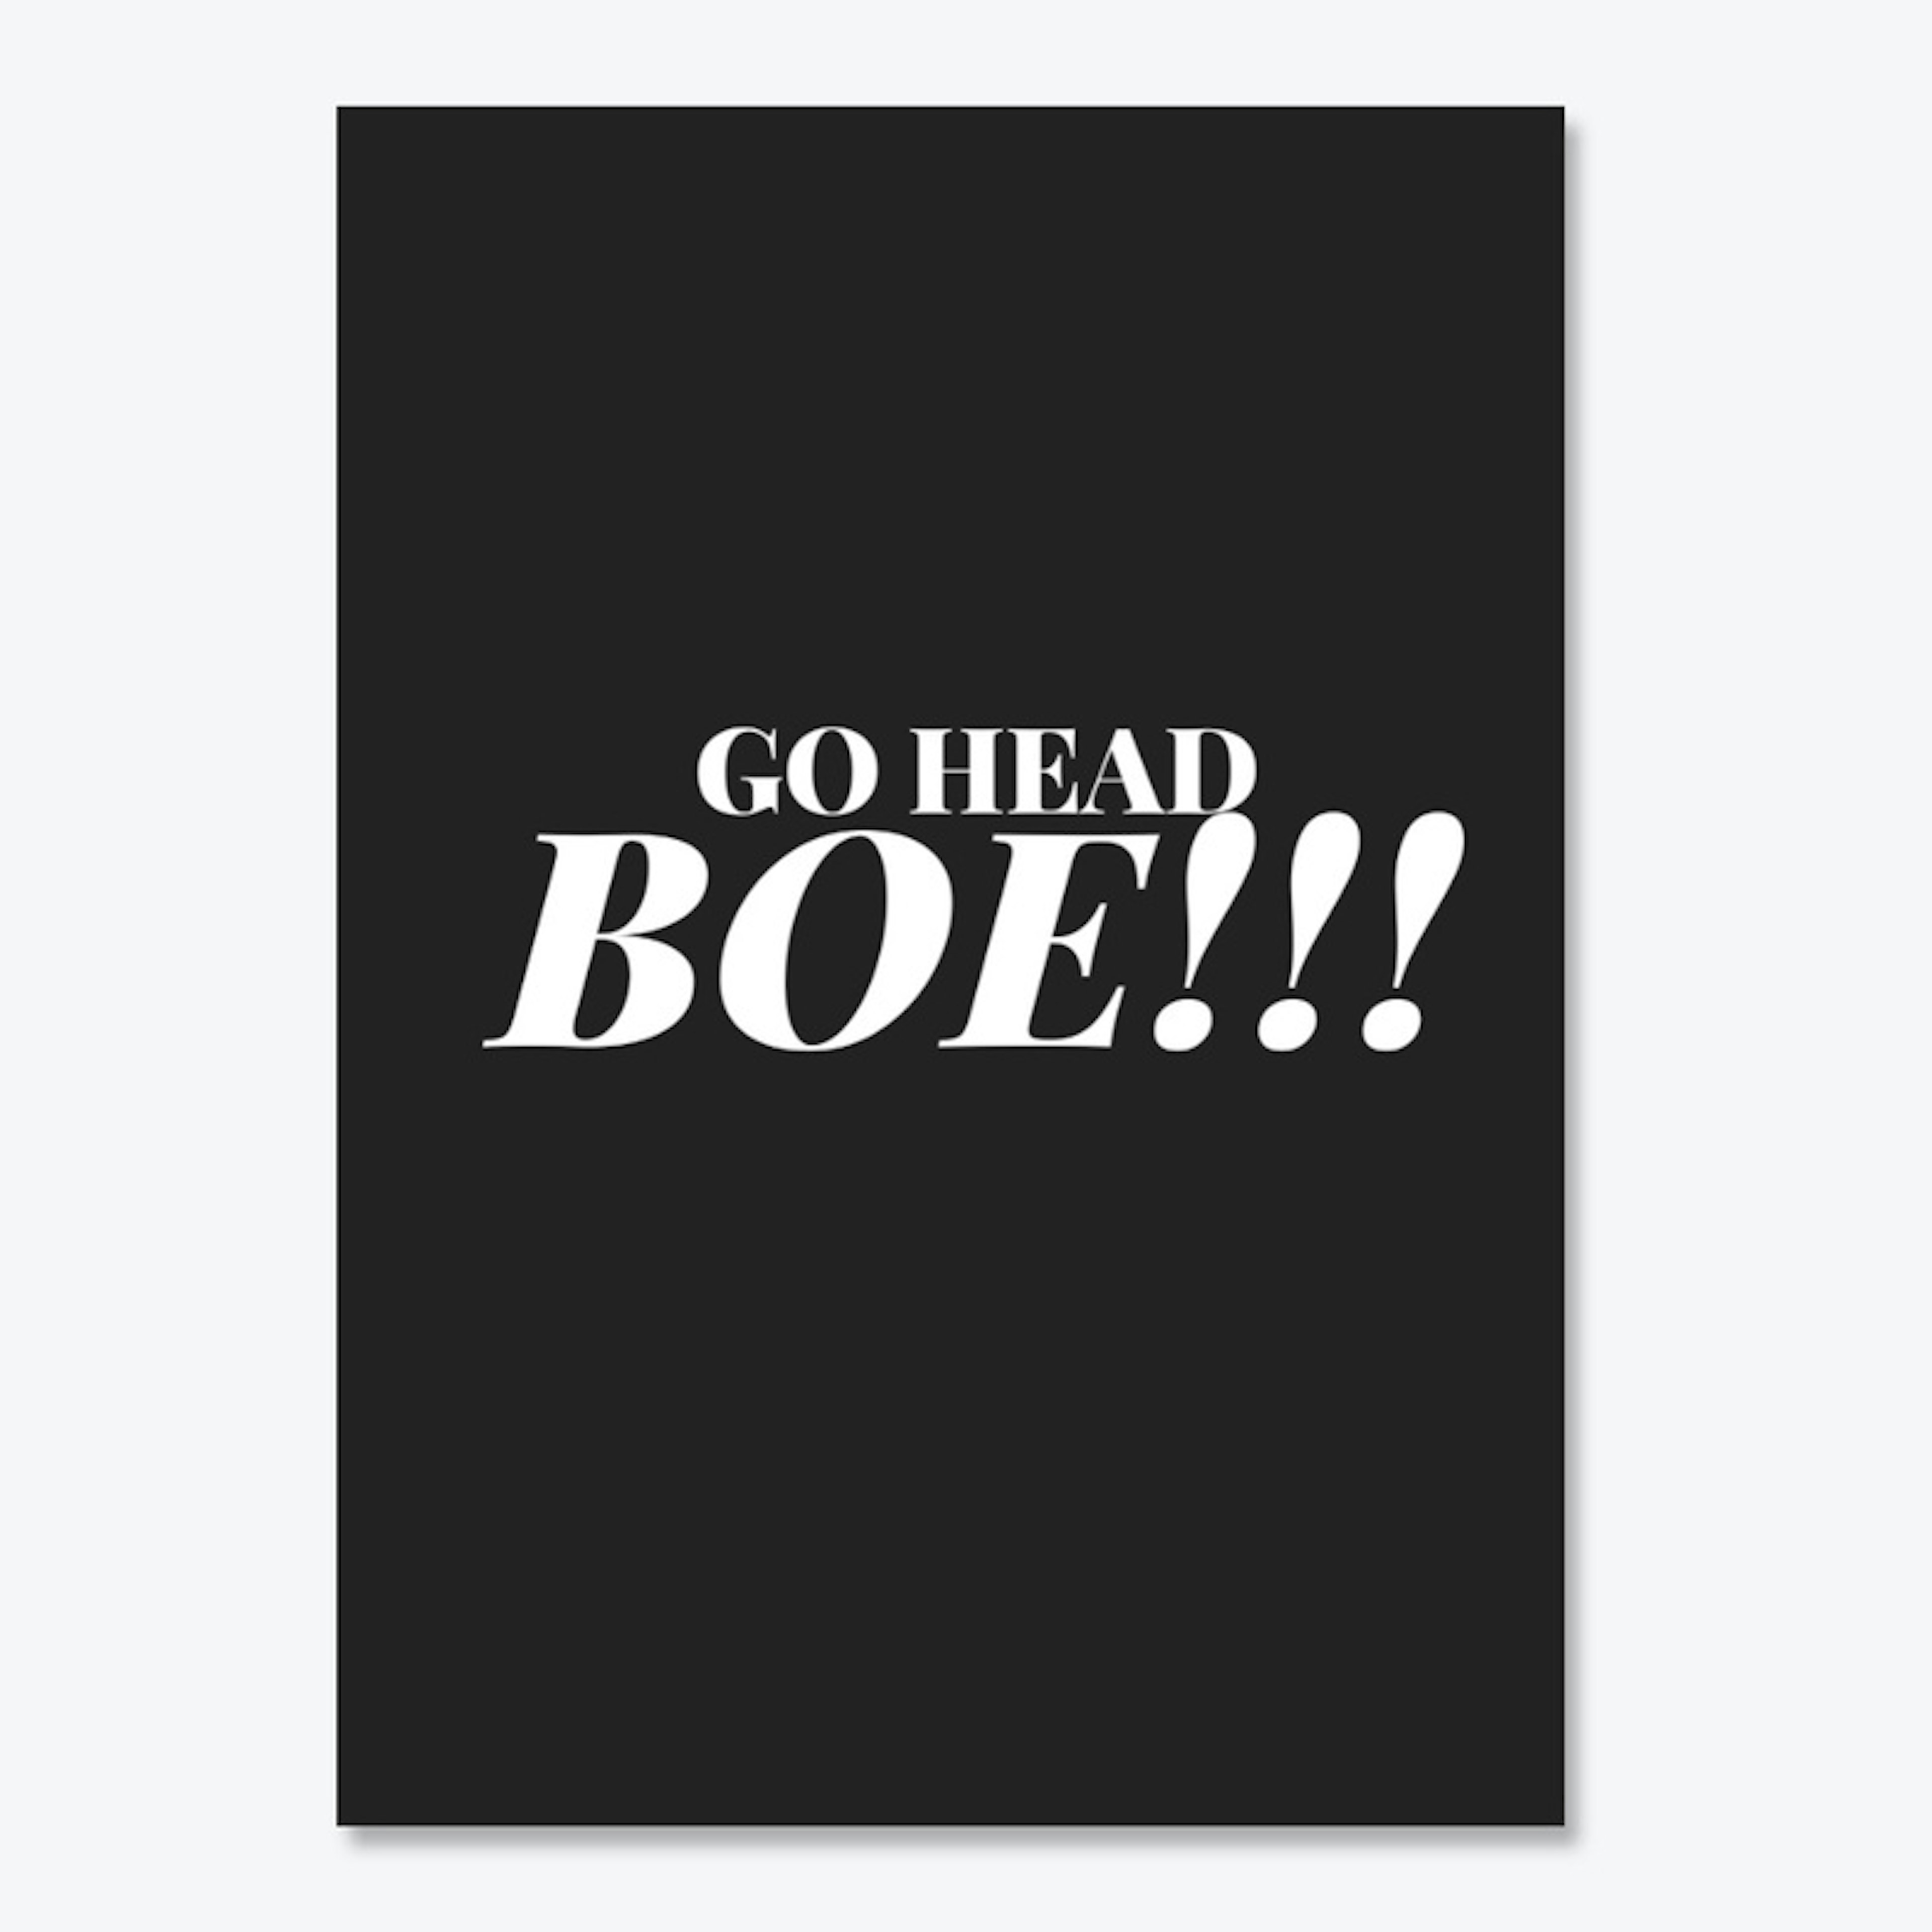 "GO HEAD BOE"